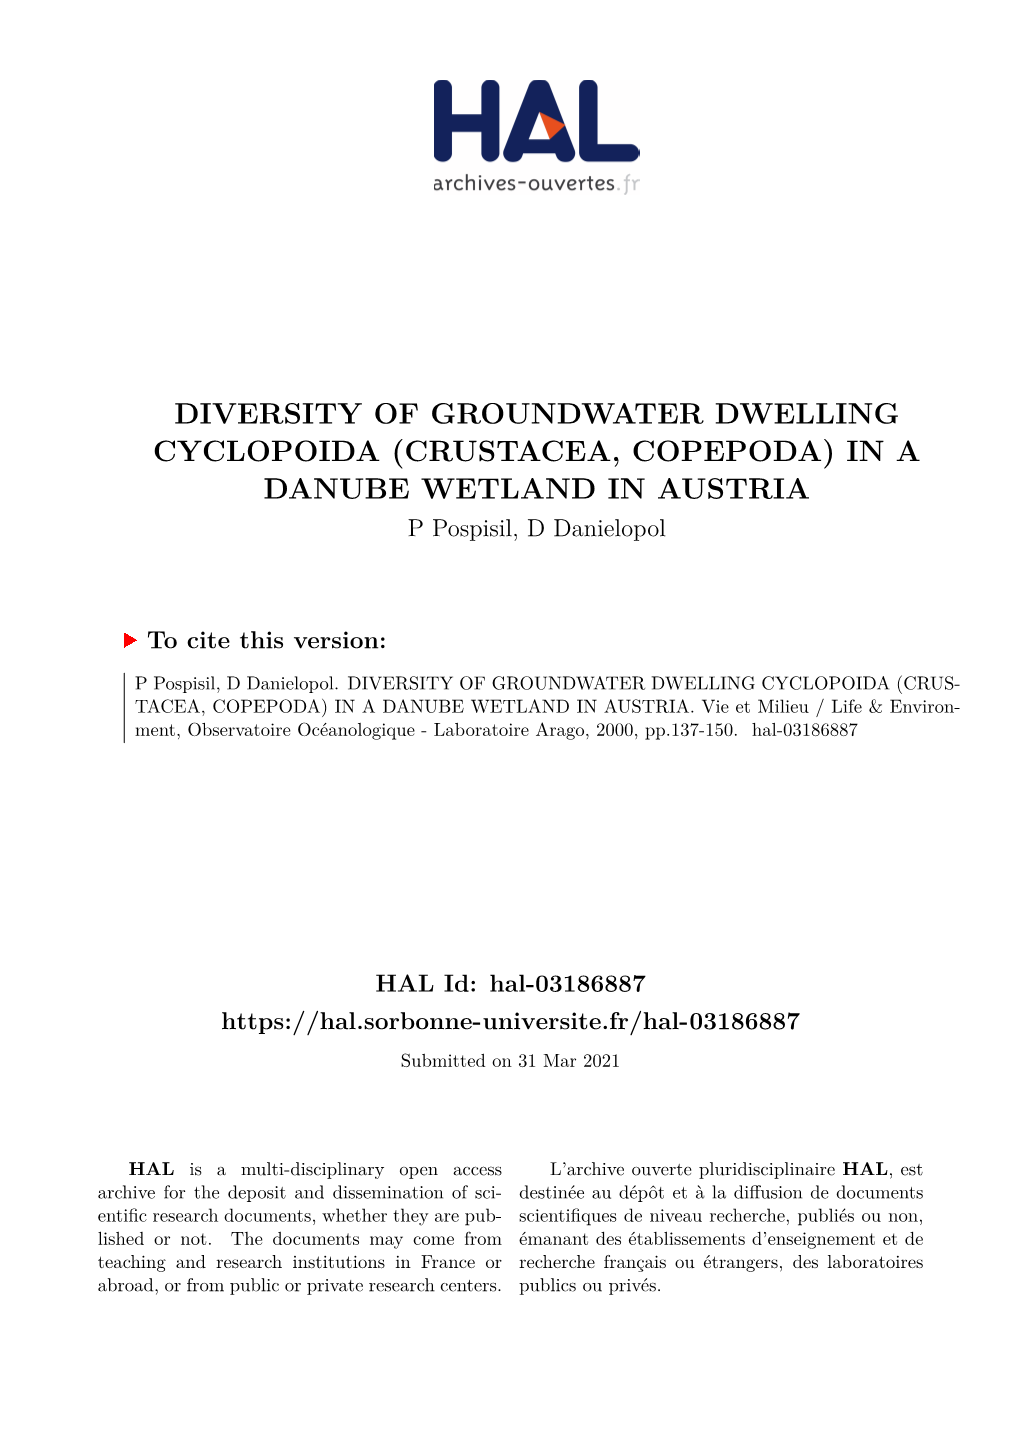 DIVERSITY of GROUNDWATER DWELLING CYCLOPOIDA (CRUSTACEA, COPEPODA) in a DANUBE WETLAND in AUSTRIA P Pospisil, D Danielopol